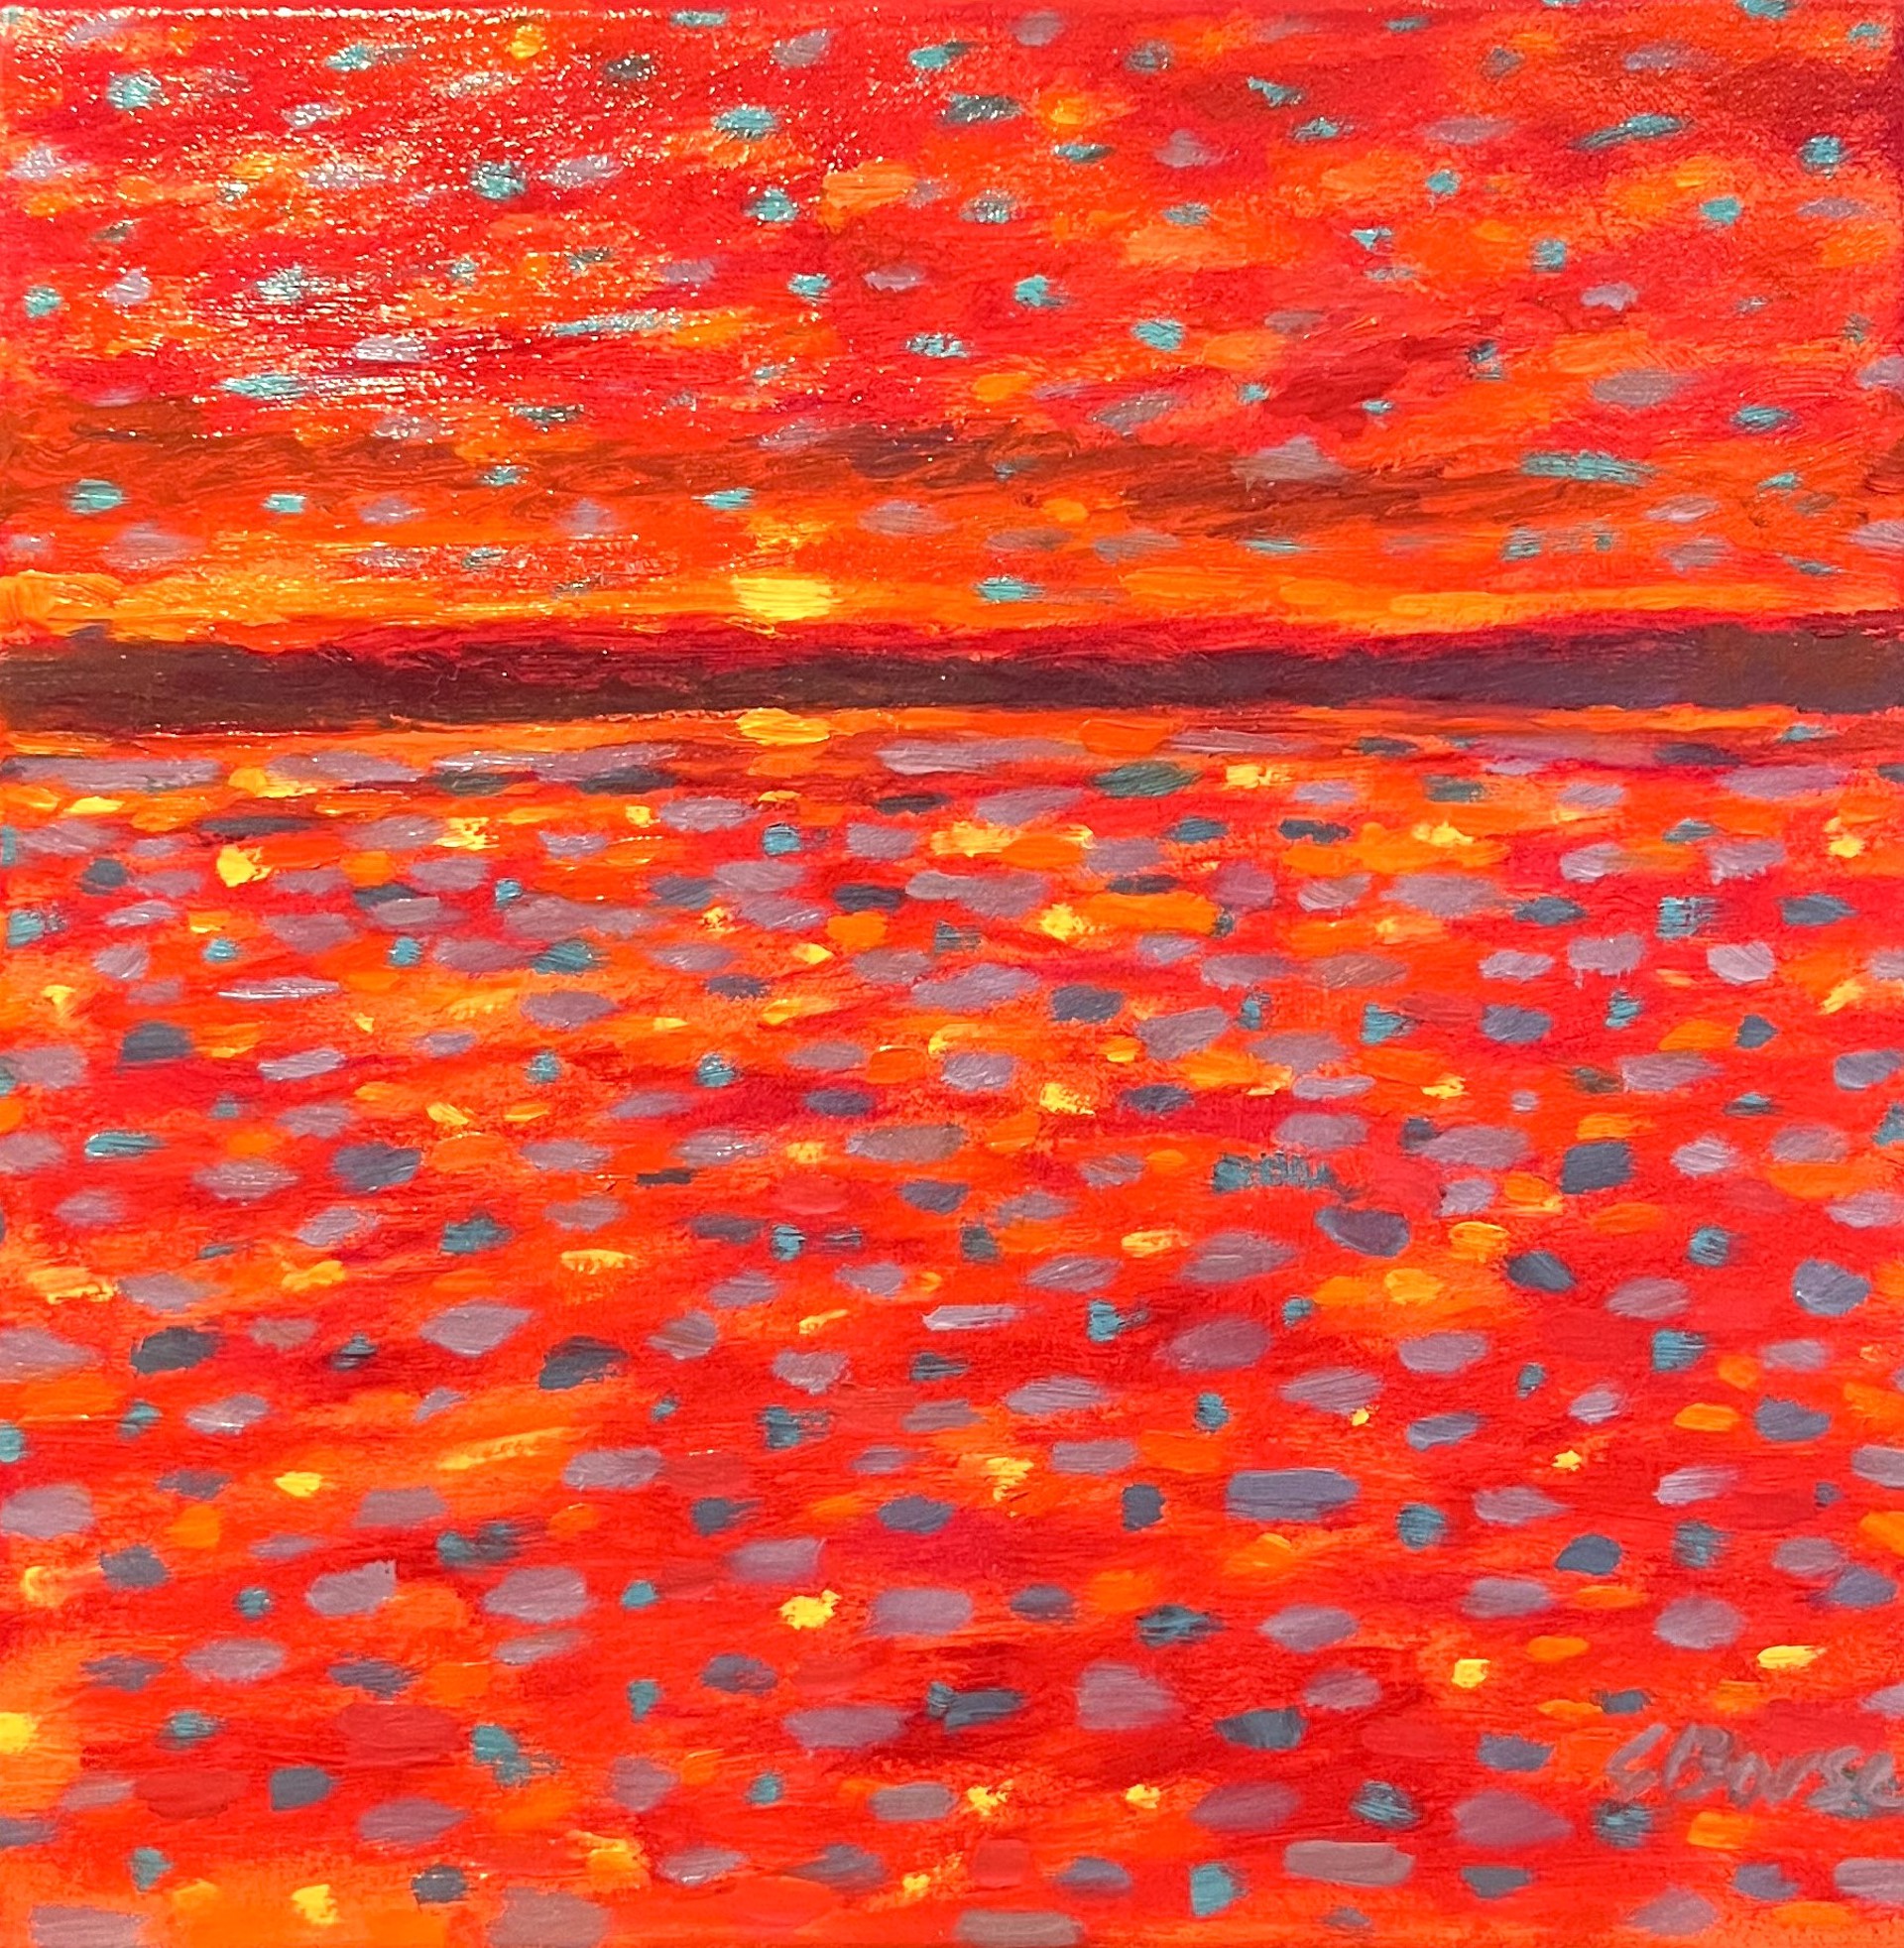 St. John's Sunset by Gary Borse